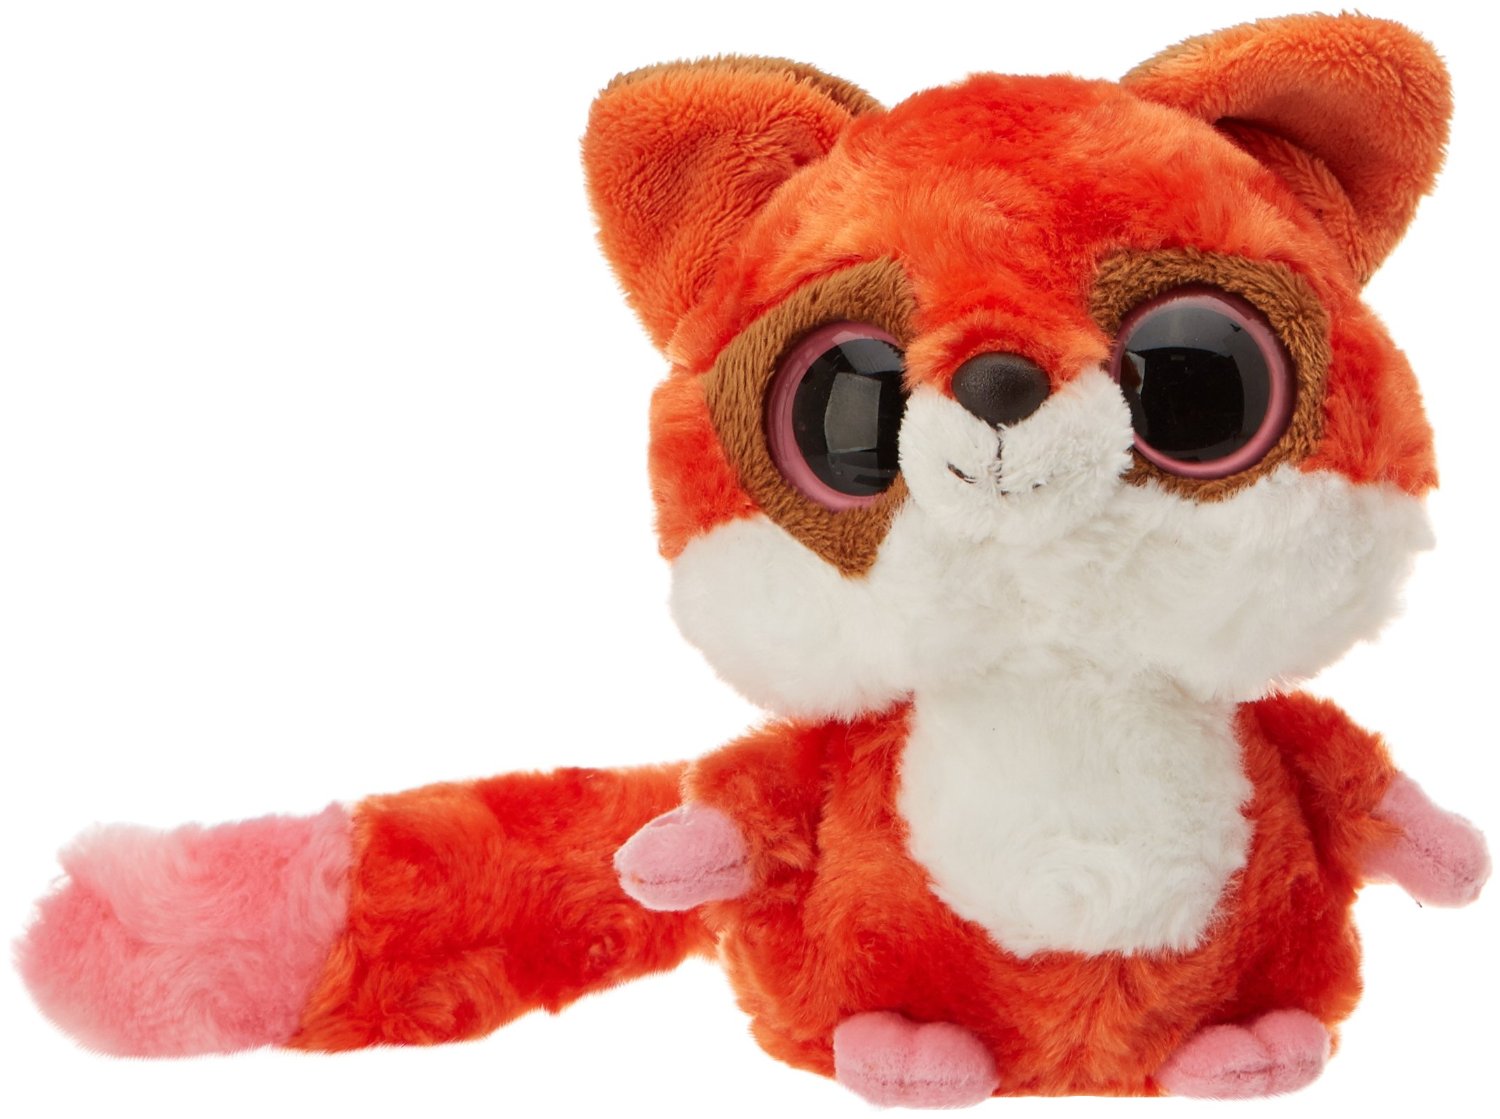 YooHoo & Friends - Peluche Red Fox, 13 cm, color naranja (Aurora World 12467)